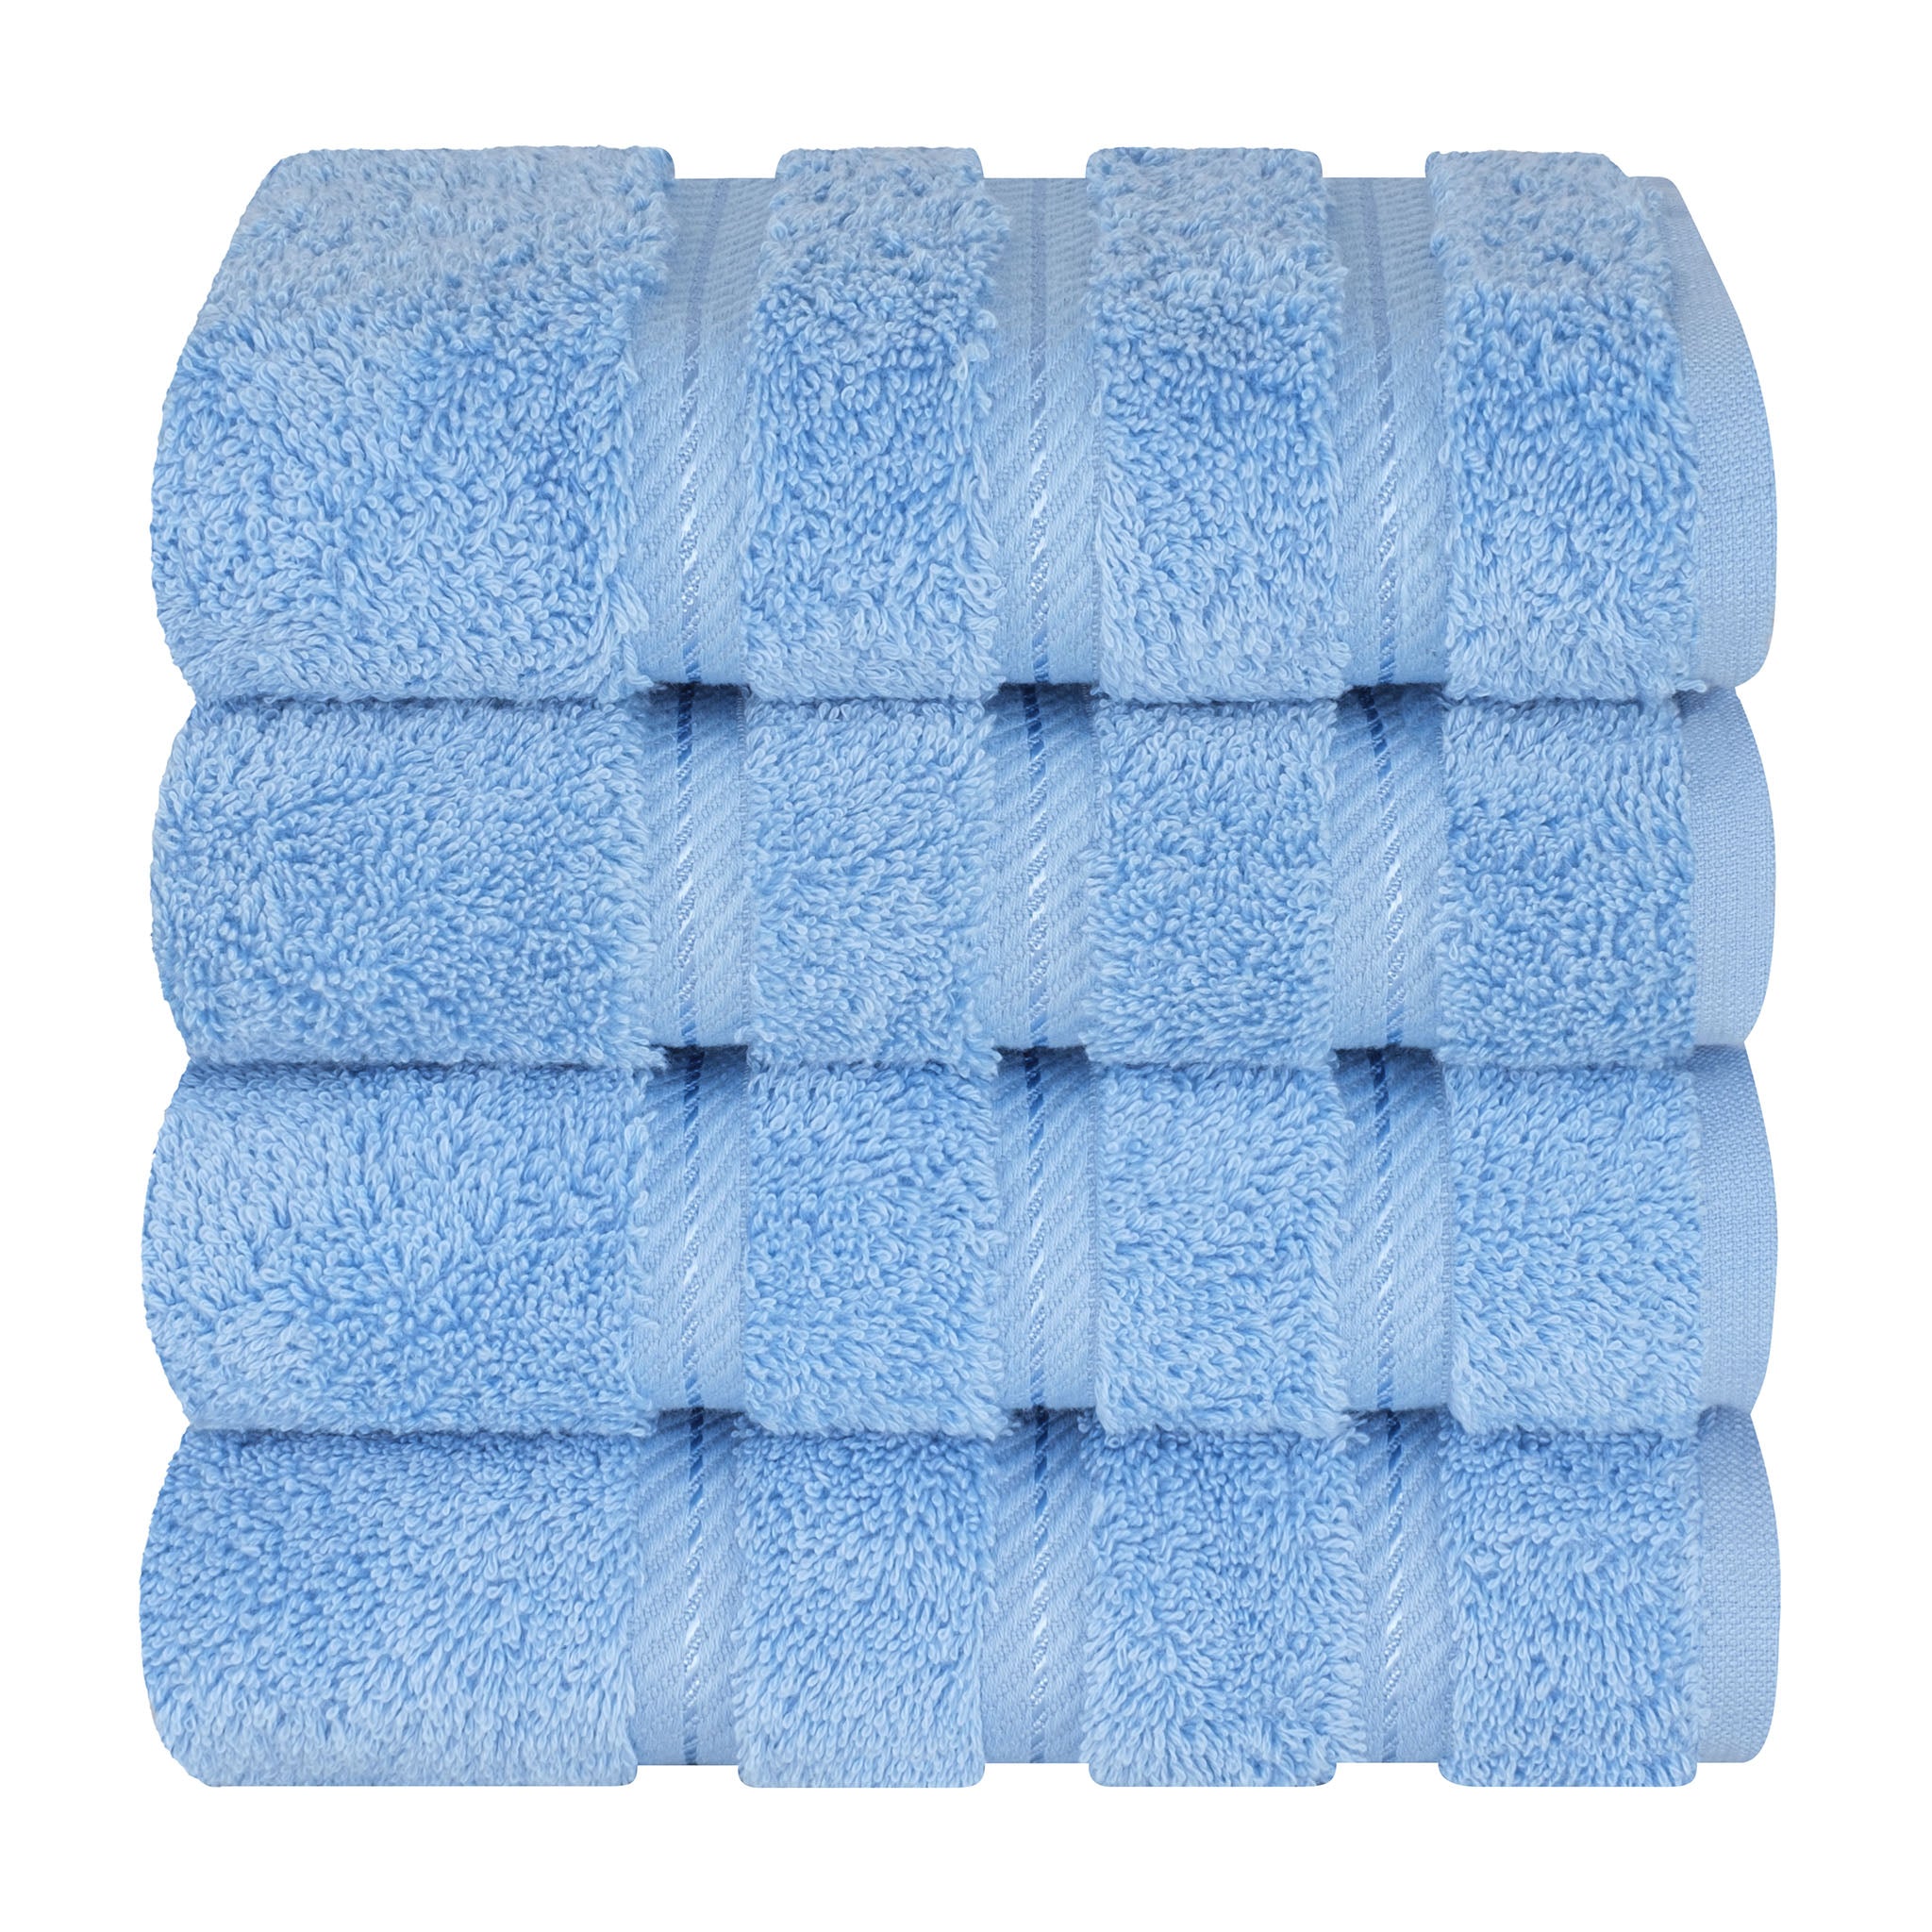  American Soft Linen 100% Turkish Cotton 4 Pack Hand Towel Set  sky-blue-7